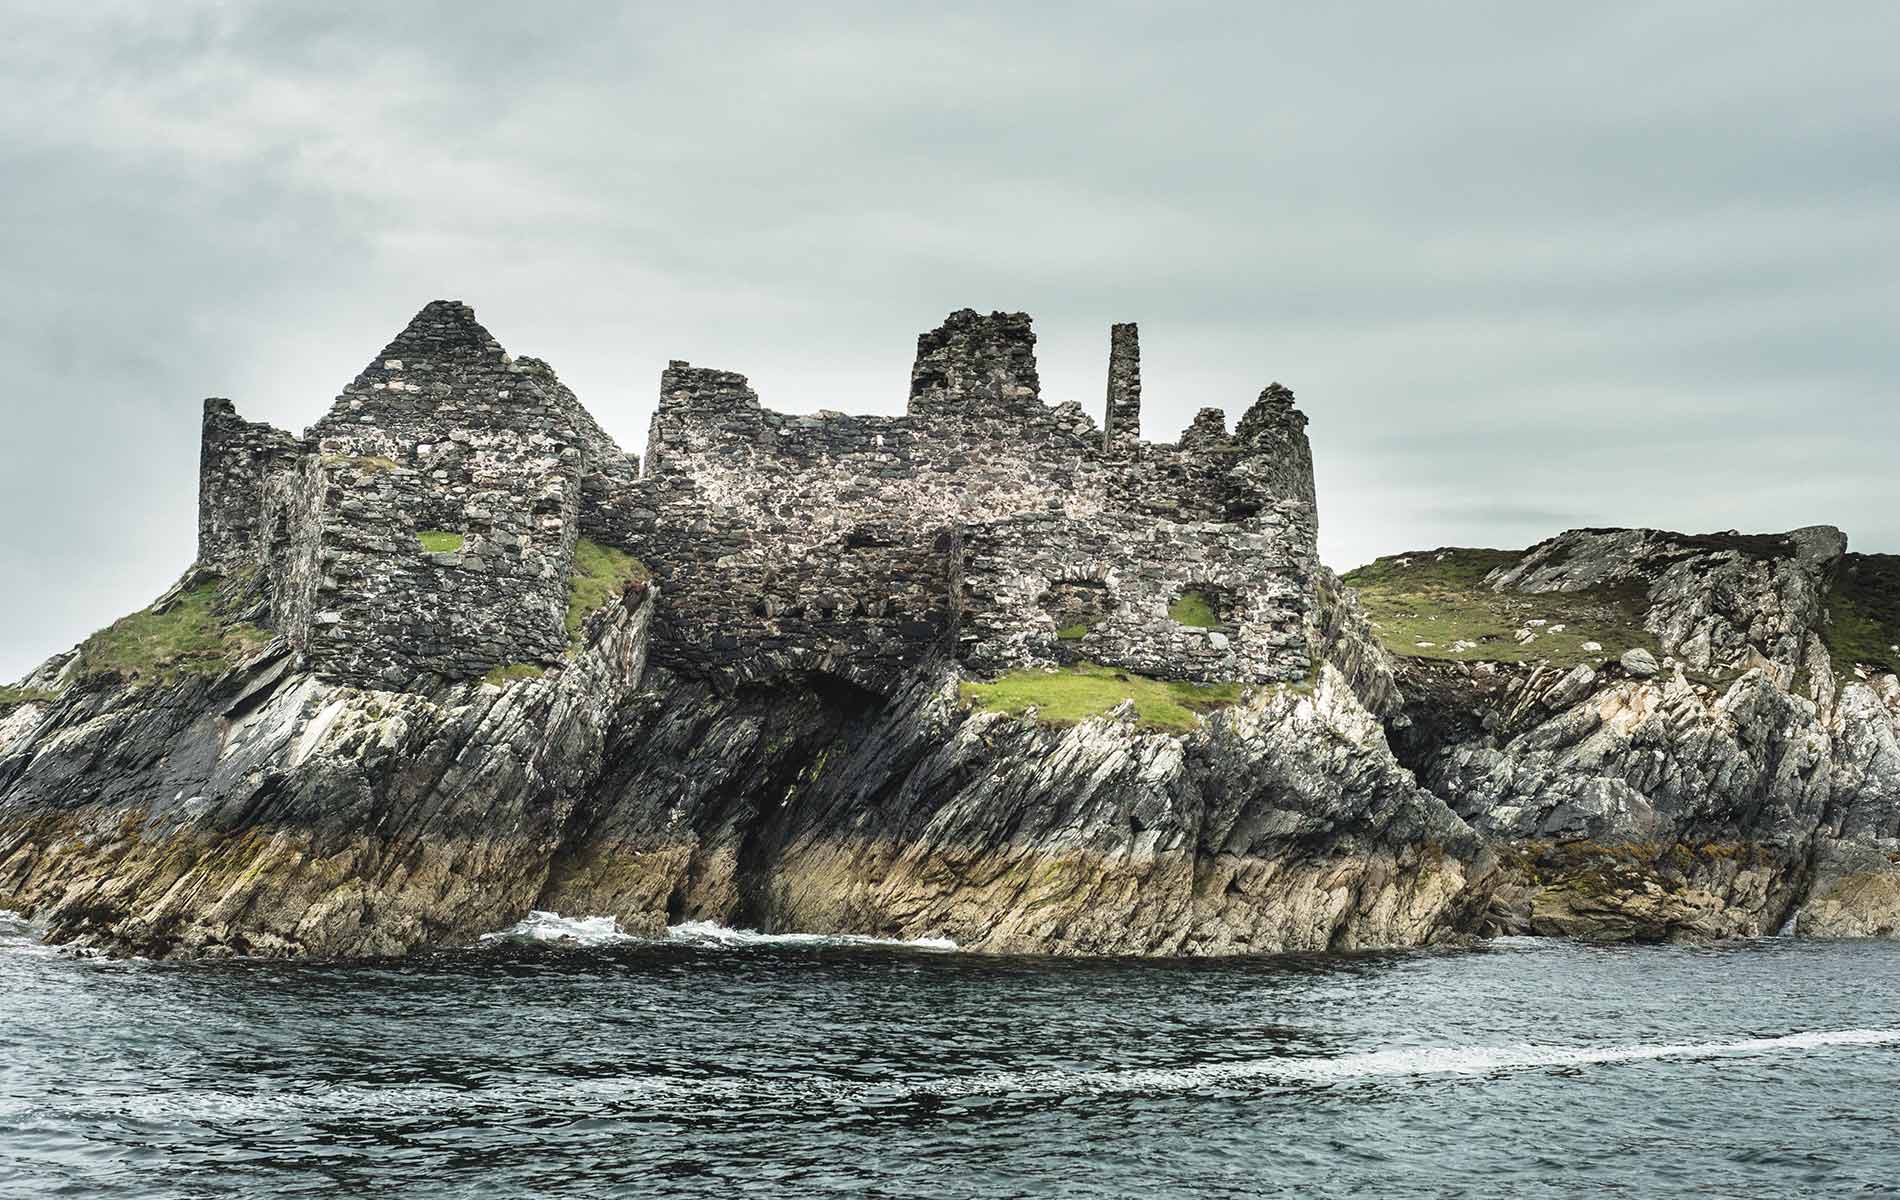 Abandoned castle ruins on Inishbofin island in Ireland